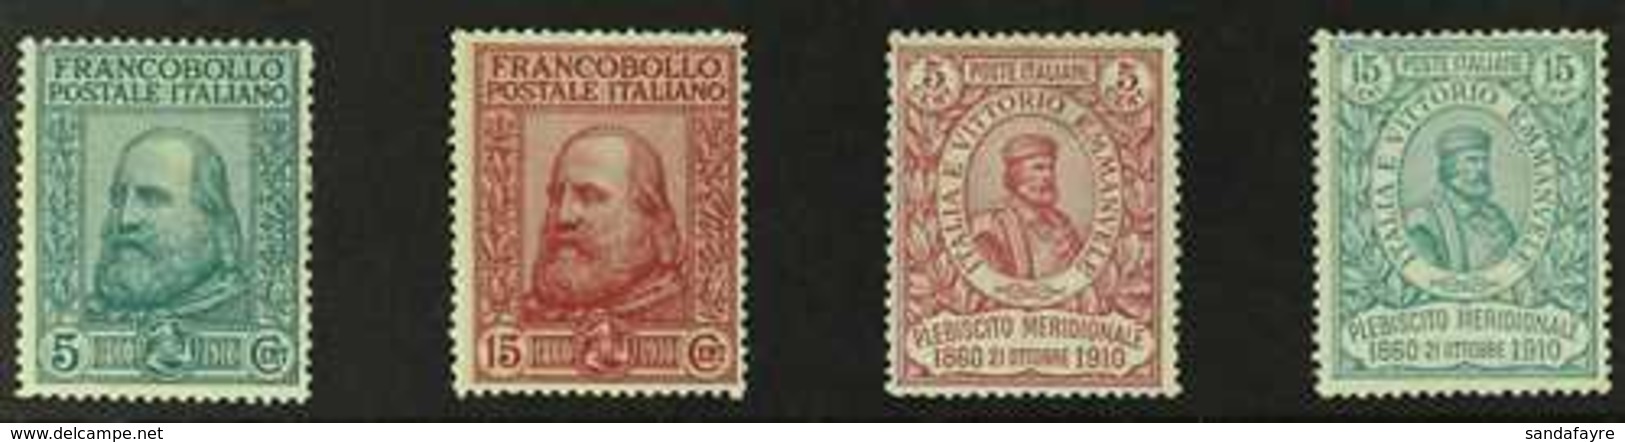 1910 50th Anniversary Of Plebiscite (Garibaldi) Complete Set (Sass S. 13, Scott 115/18, SG 81/84), Never Hinged Mint. Lo - Unclassified